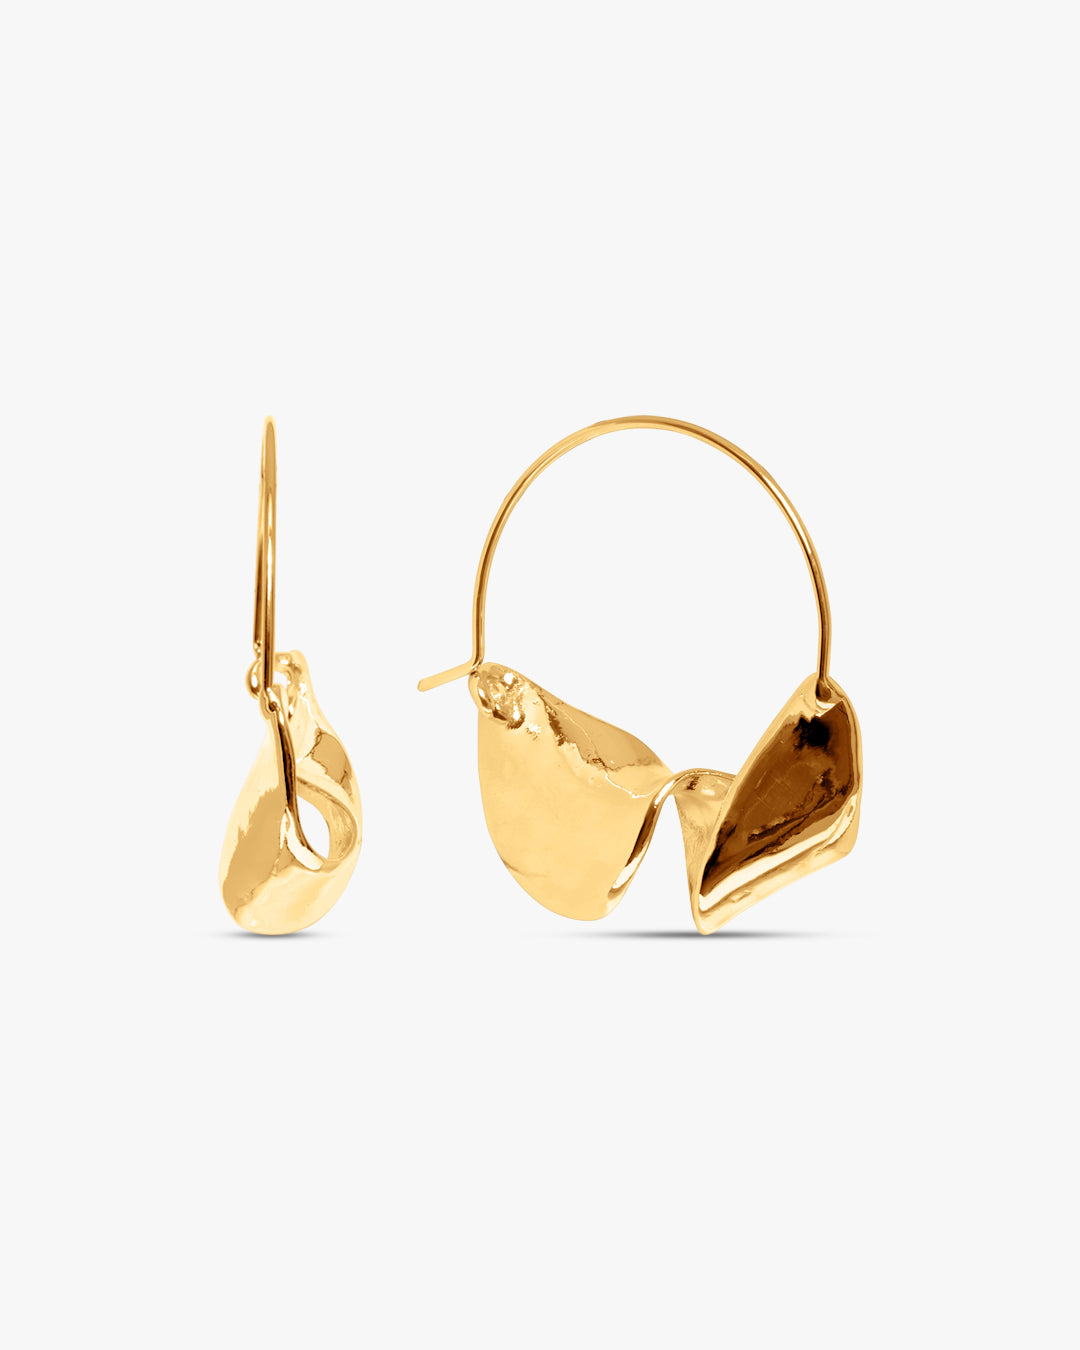 Mila Earring - Gold